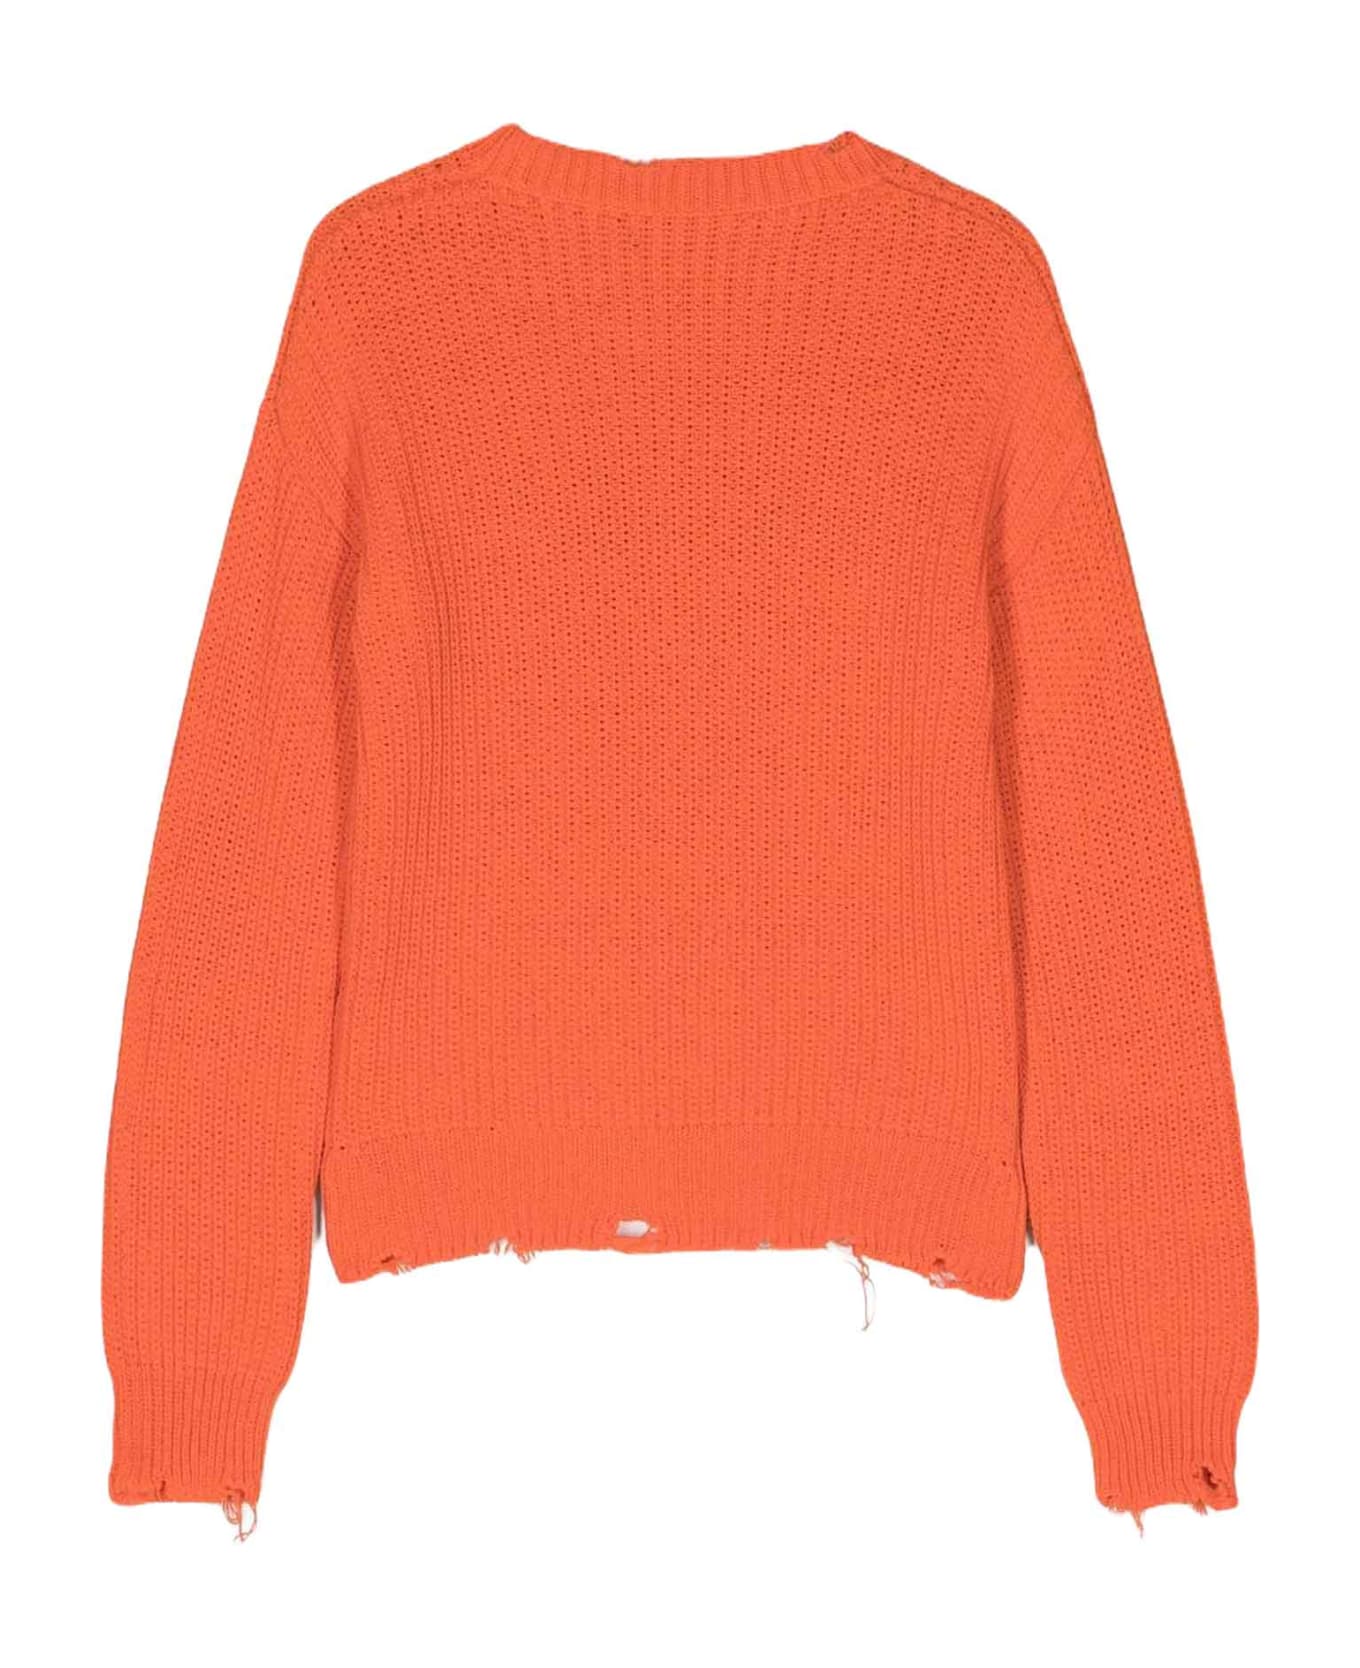 Dsquared2 Orange Sweater Boy - Arancione